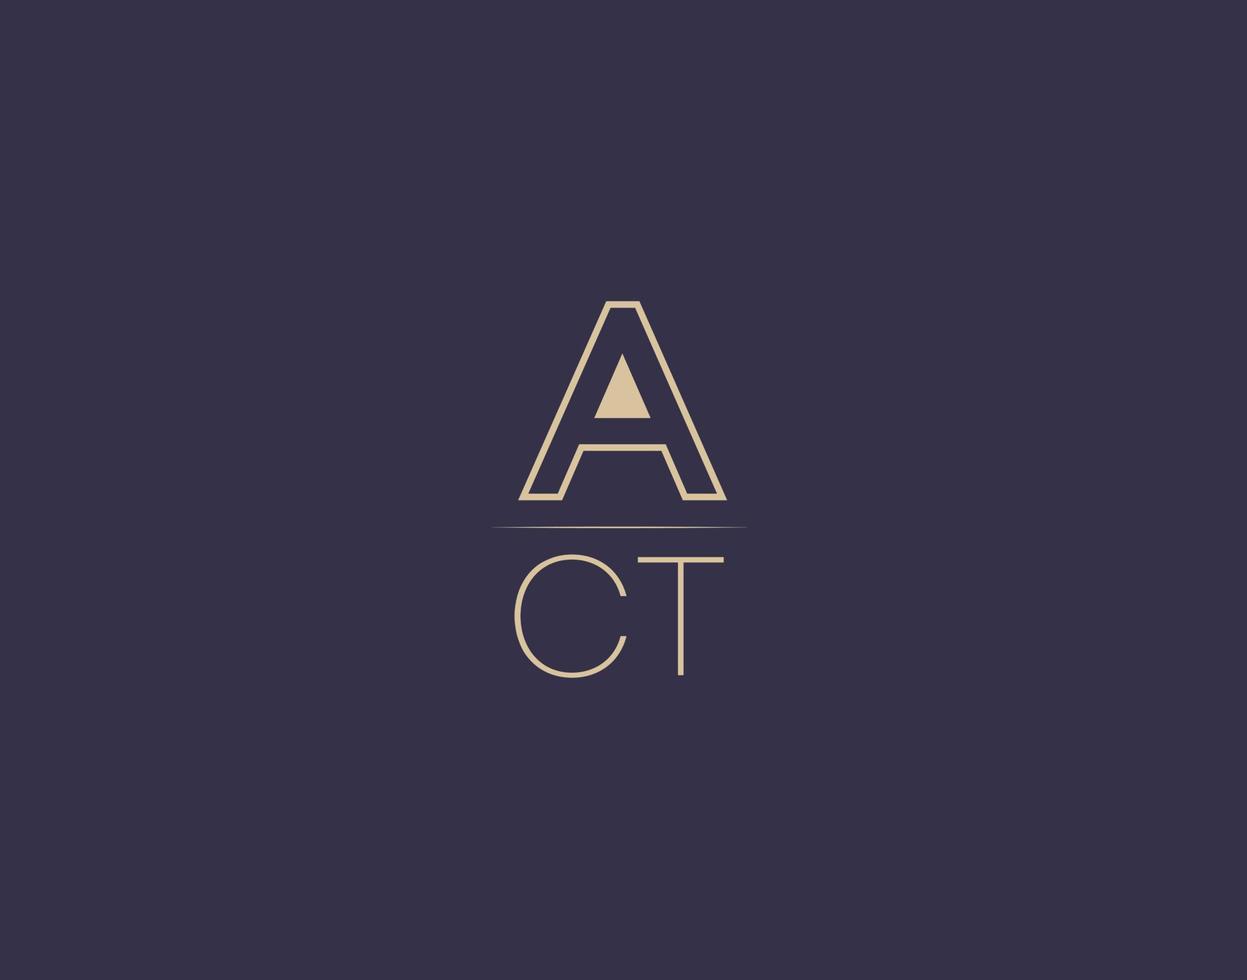 ACT letter logo design modern minimalist vector images